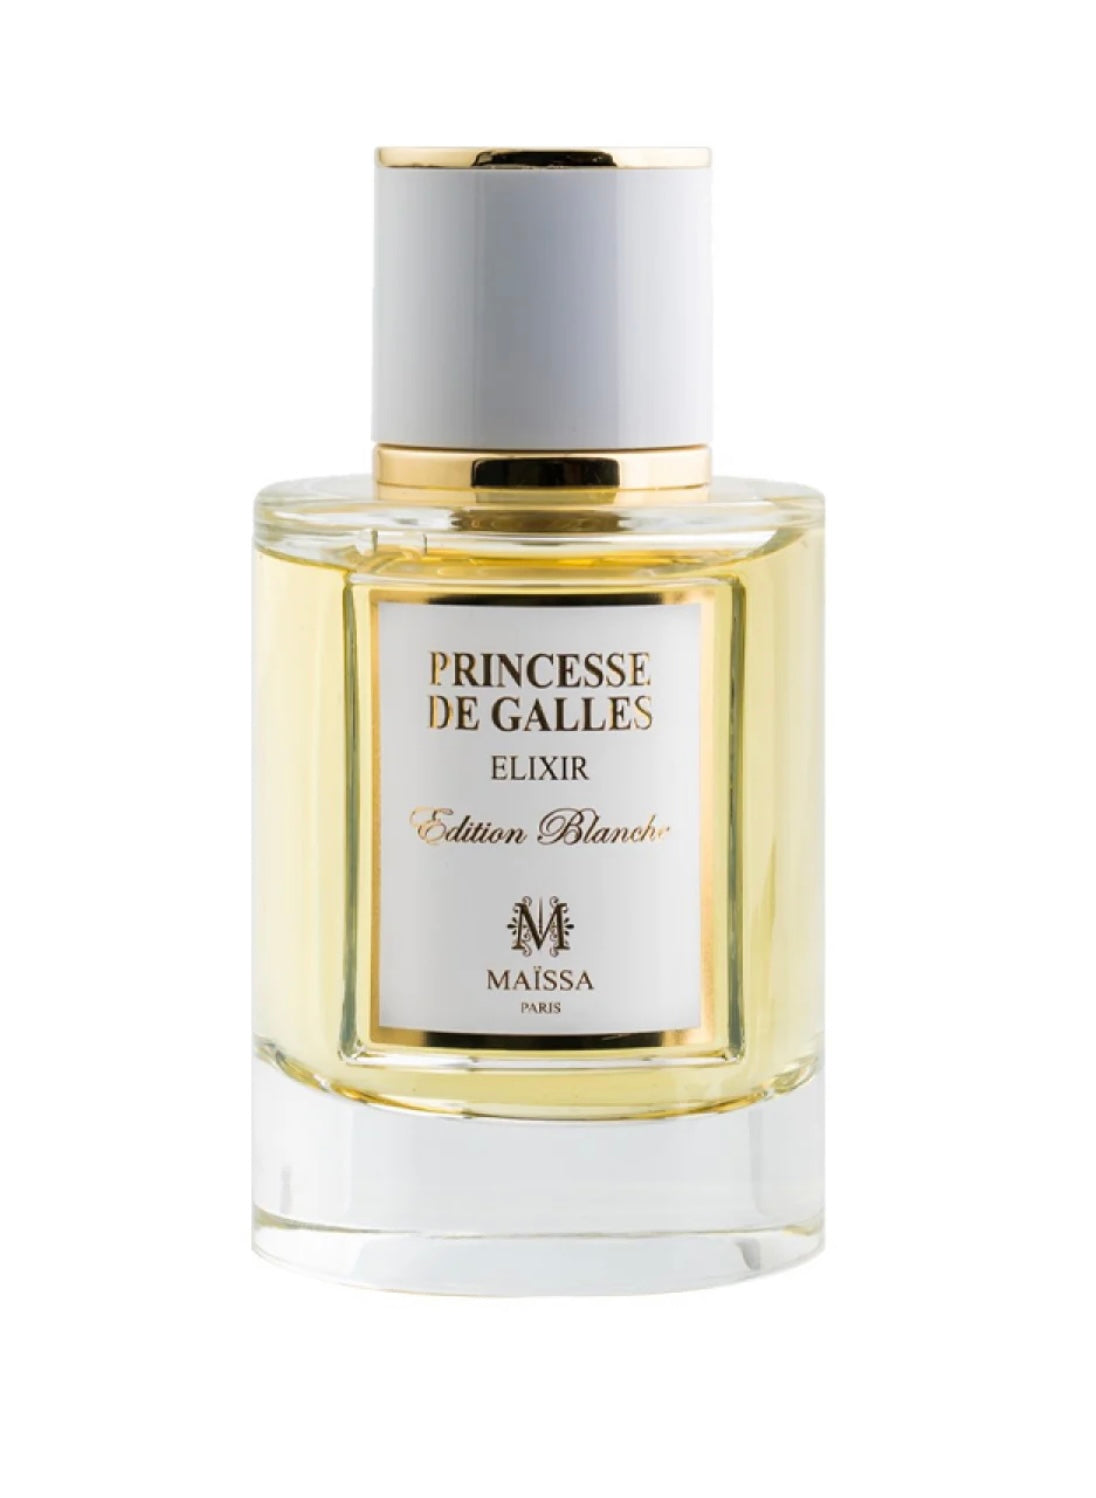 Maissa Paris Princess de Galles luxury perfume